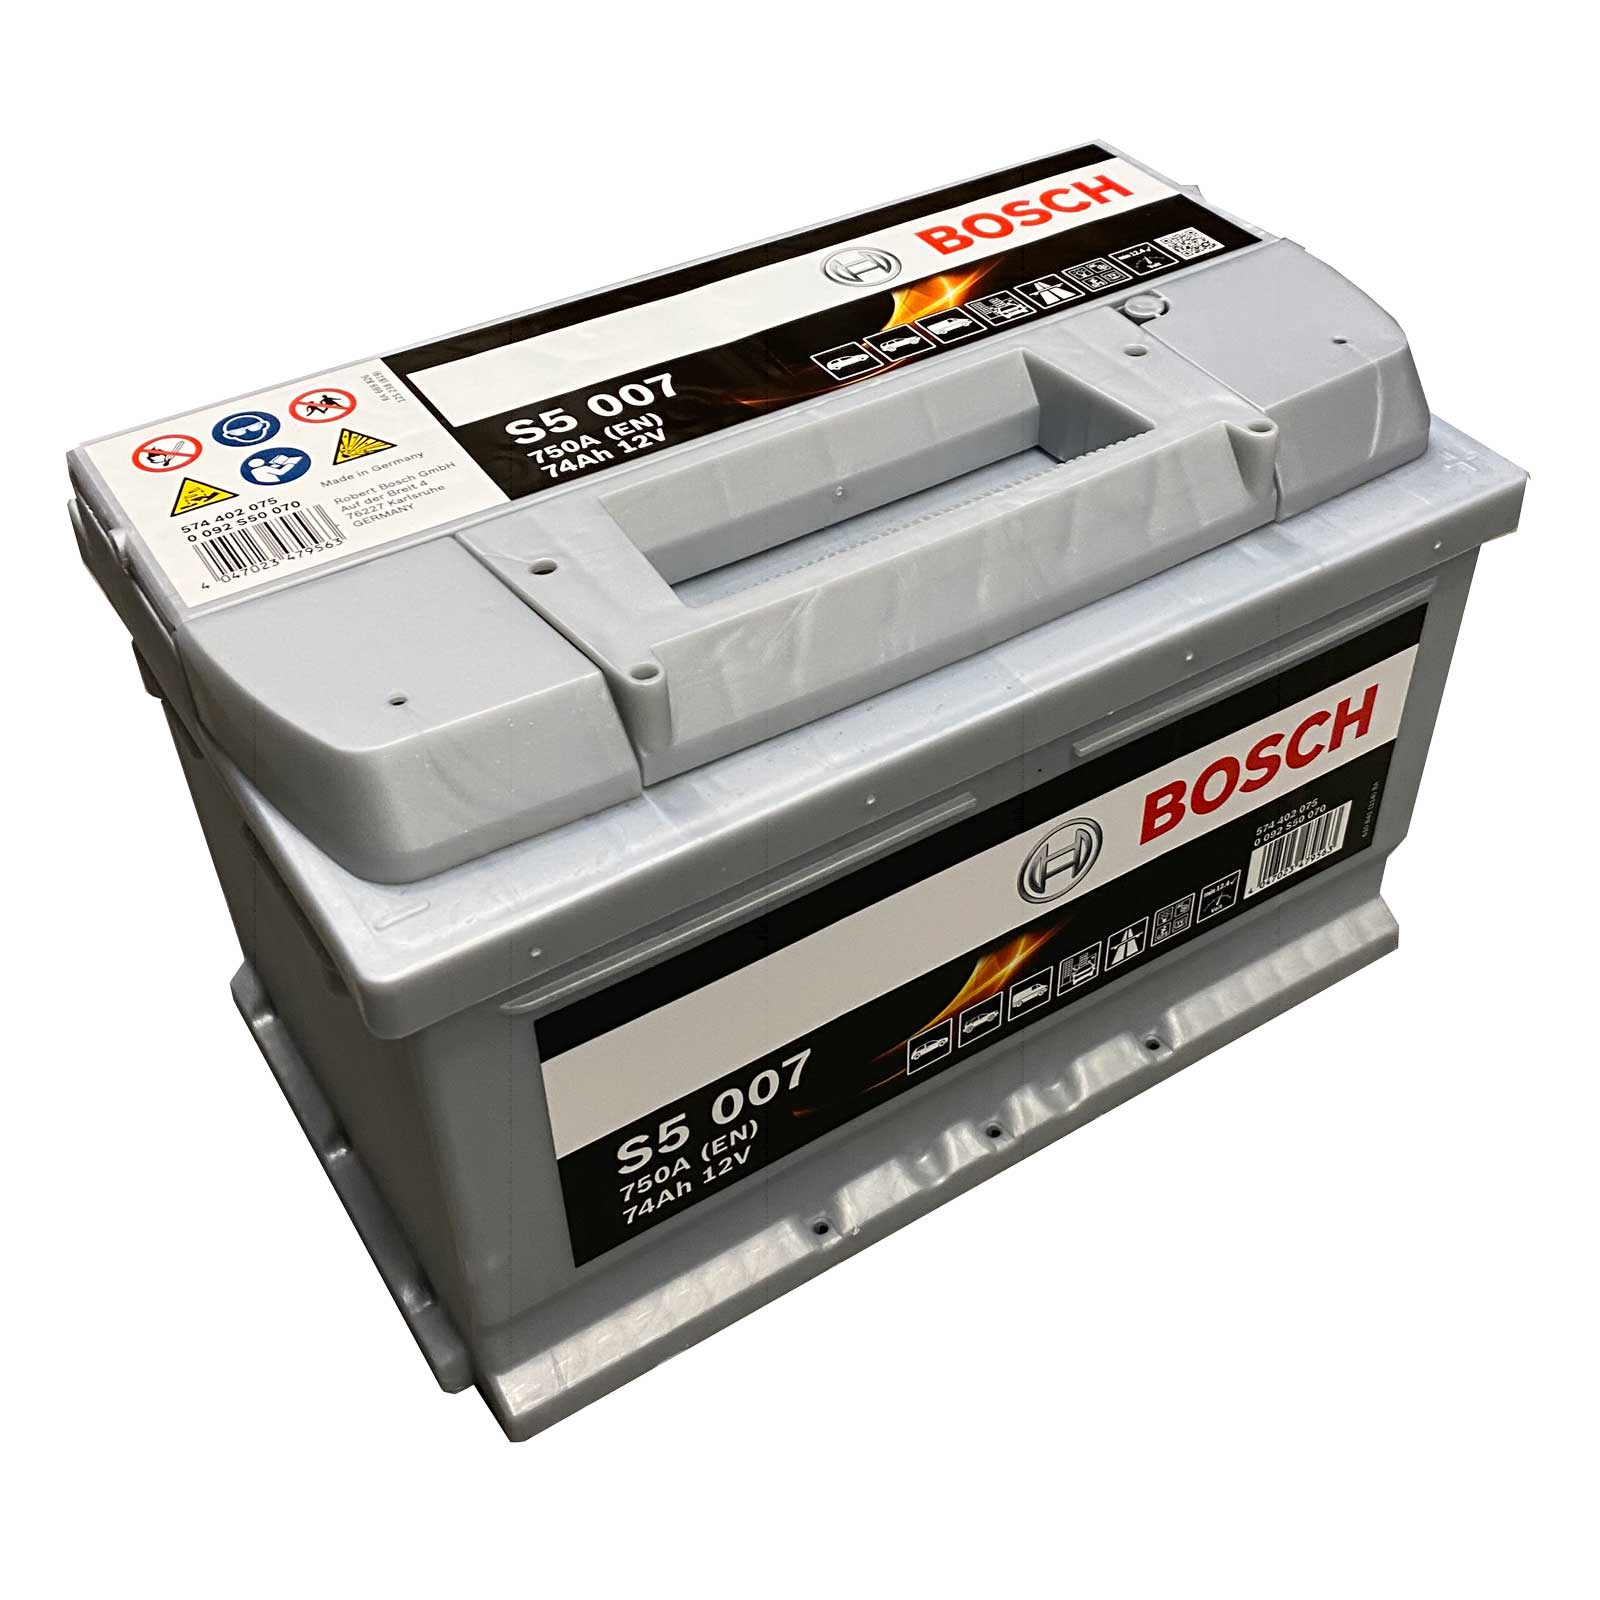 Bosch S5 007 Autobatterie 12V 74Ah 750A, Starterbatterie, Boot, Batterien für